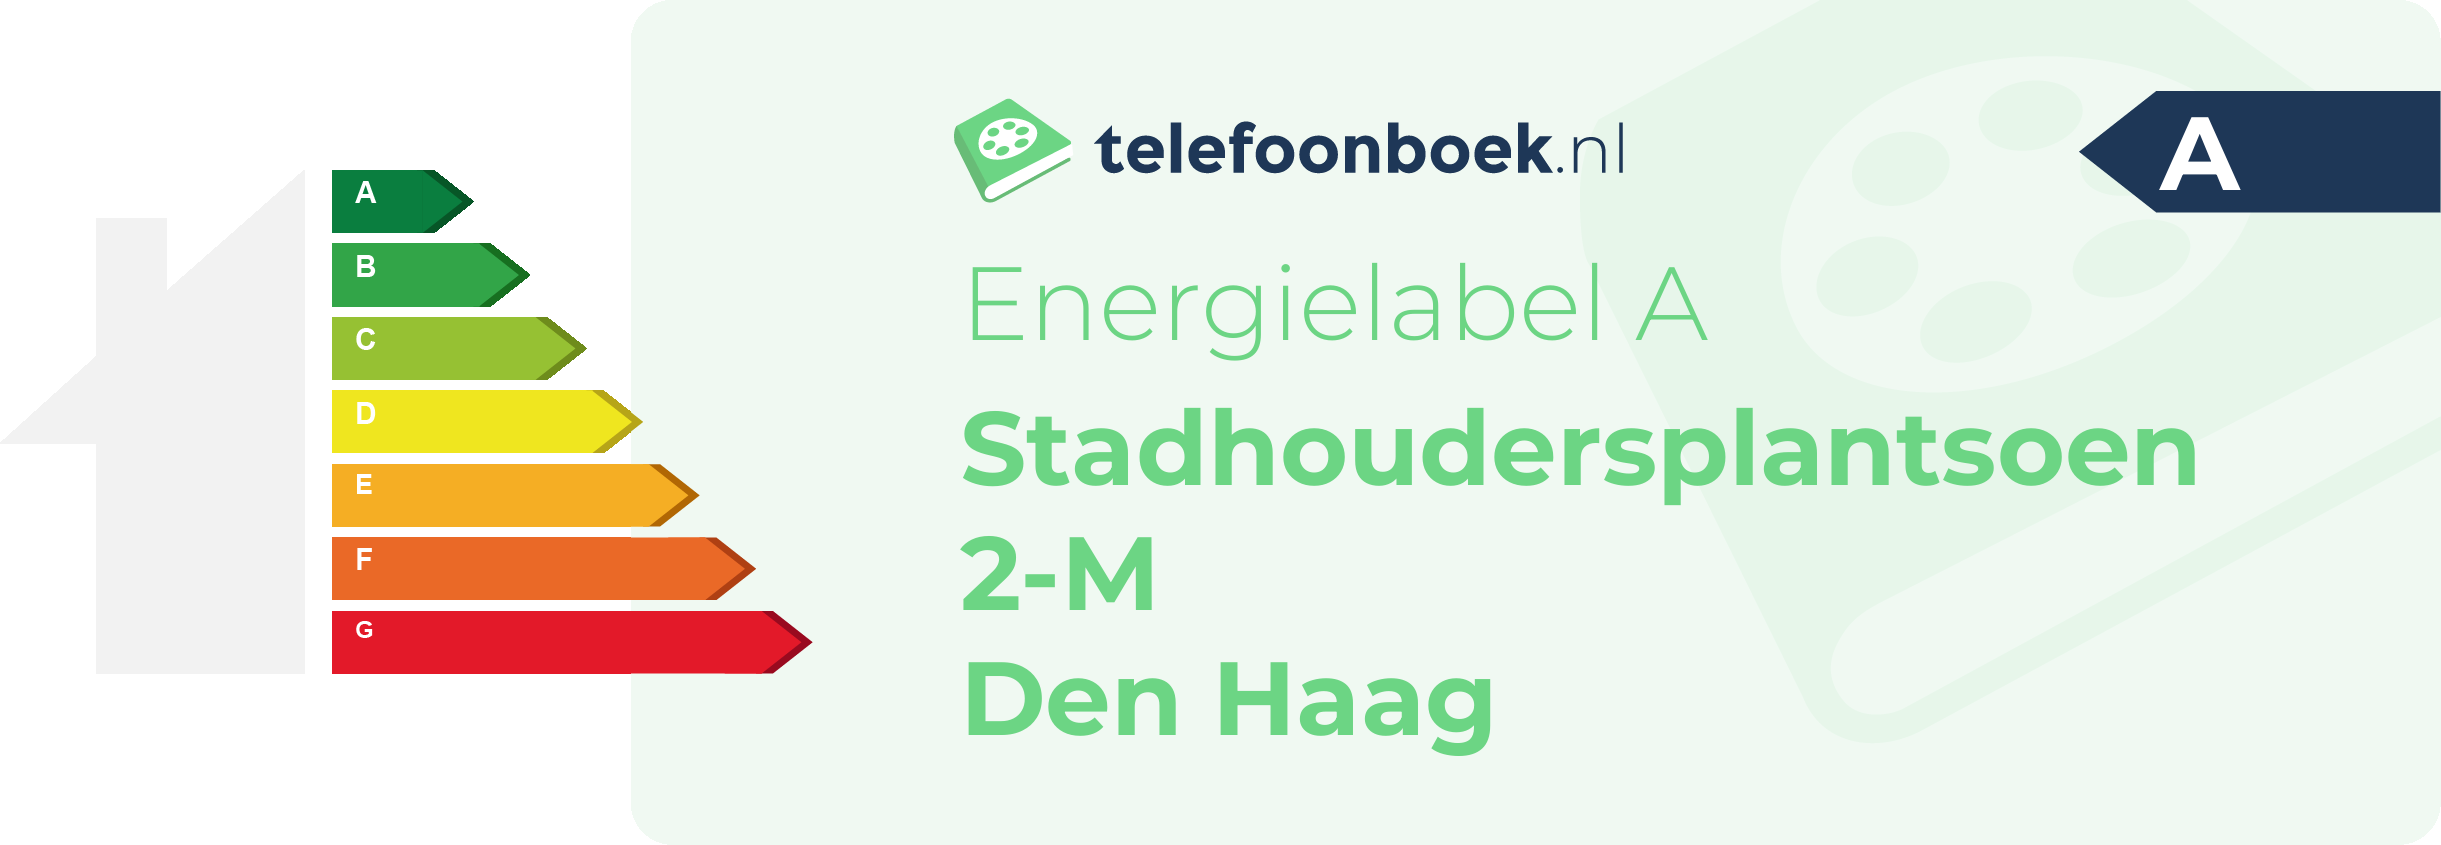 Energielabel Stadhoudersplantsoen 2-M Den Haag